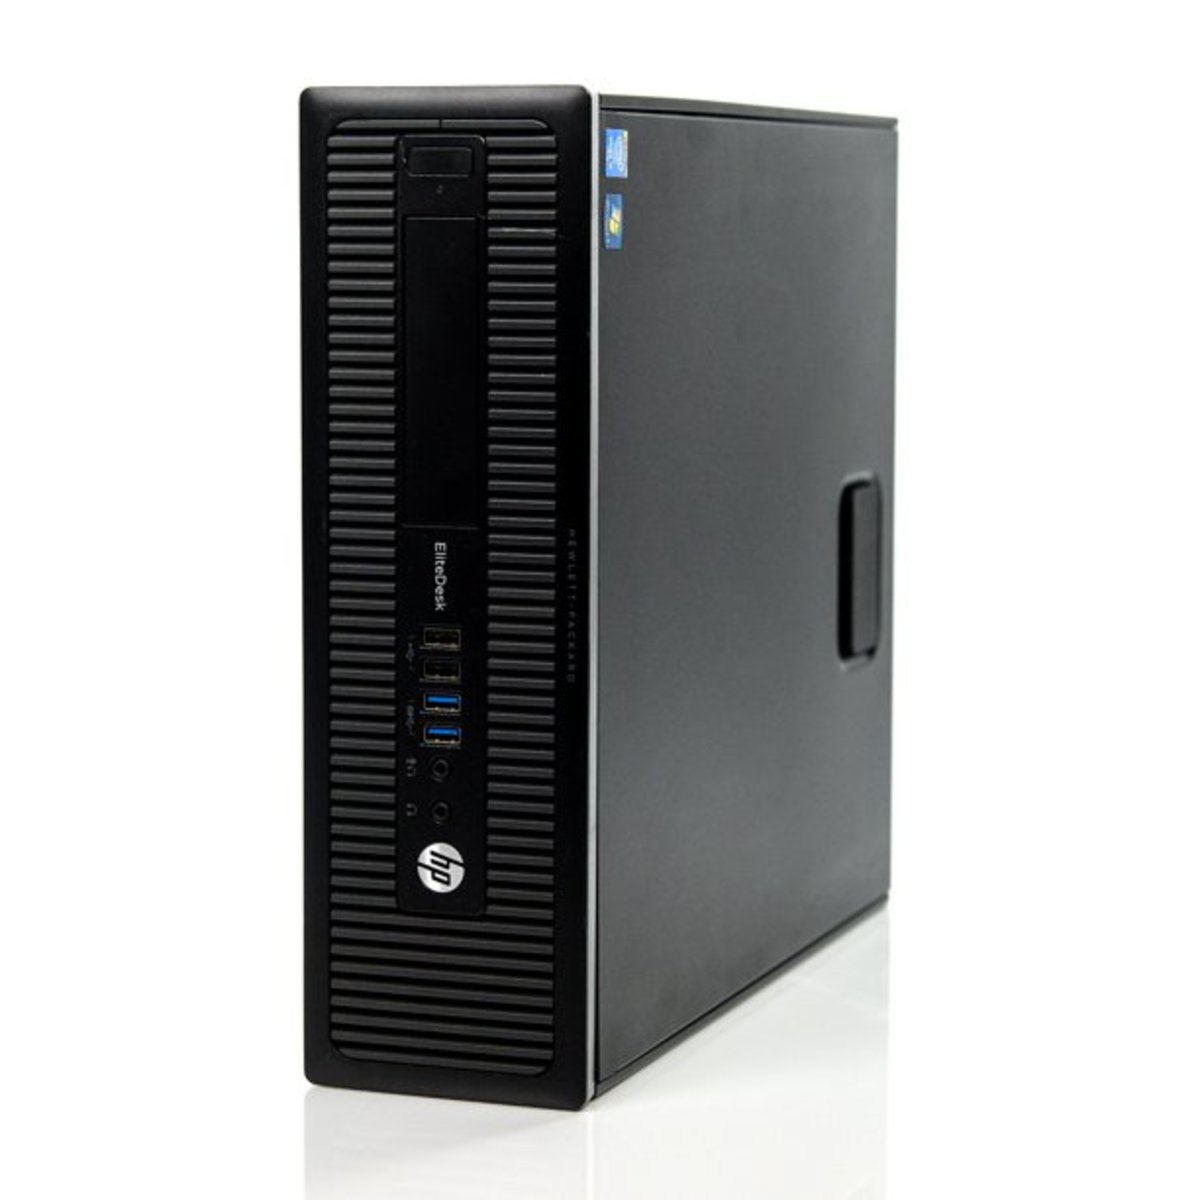 Desktop PC review: HP EliteDesktop 800 G1 Small Form Factor